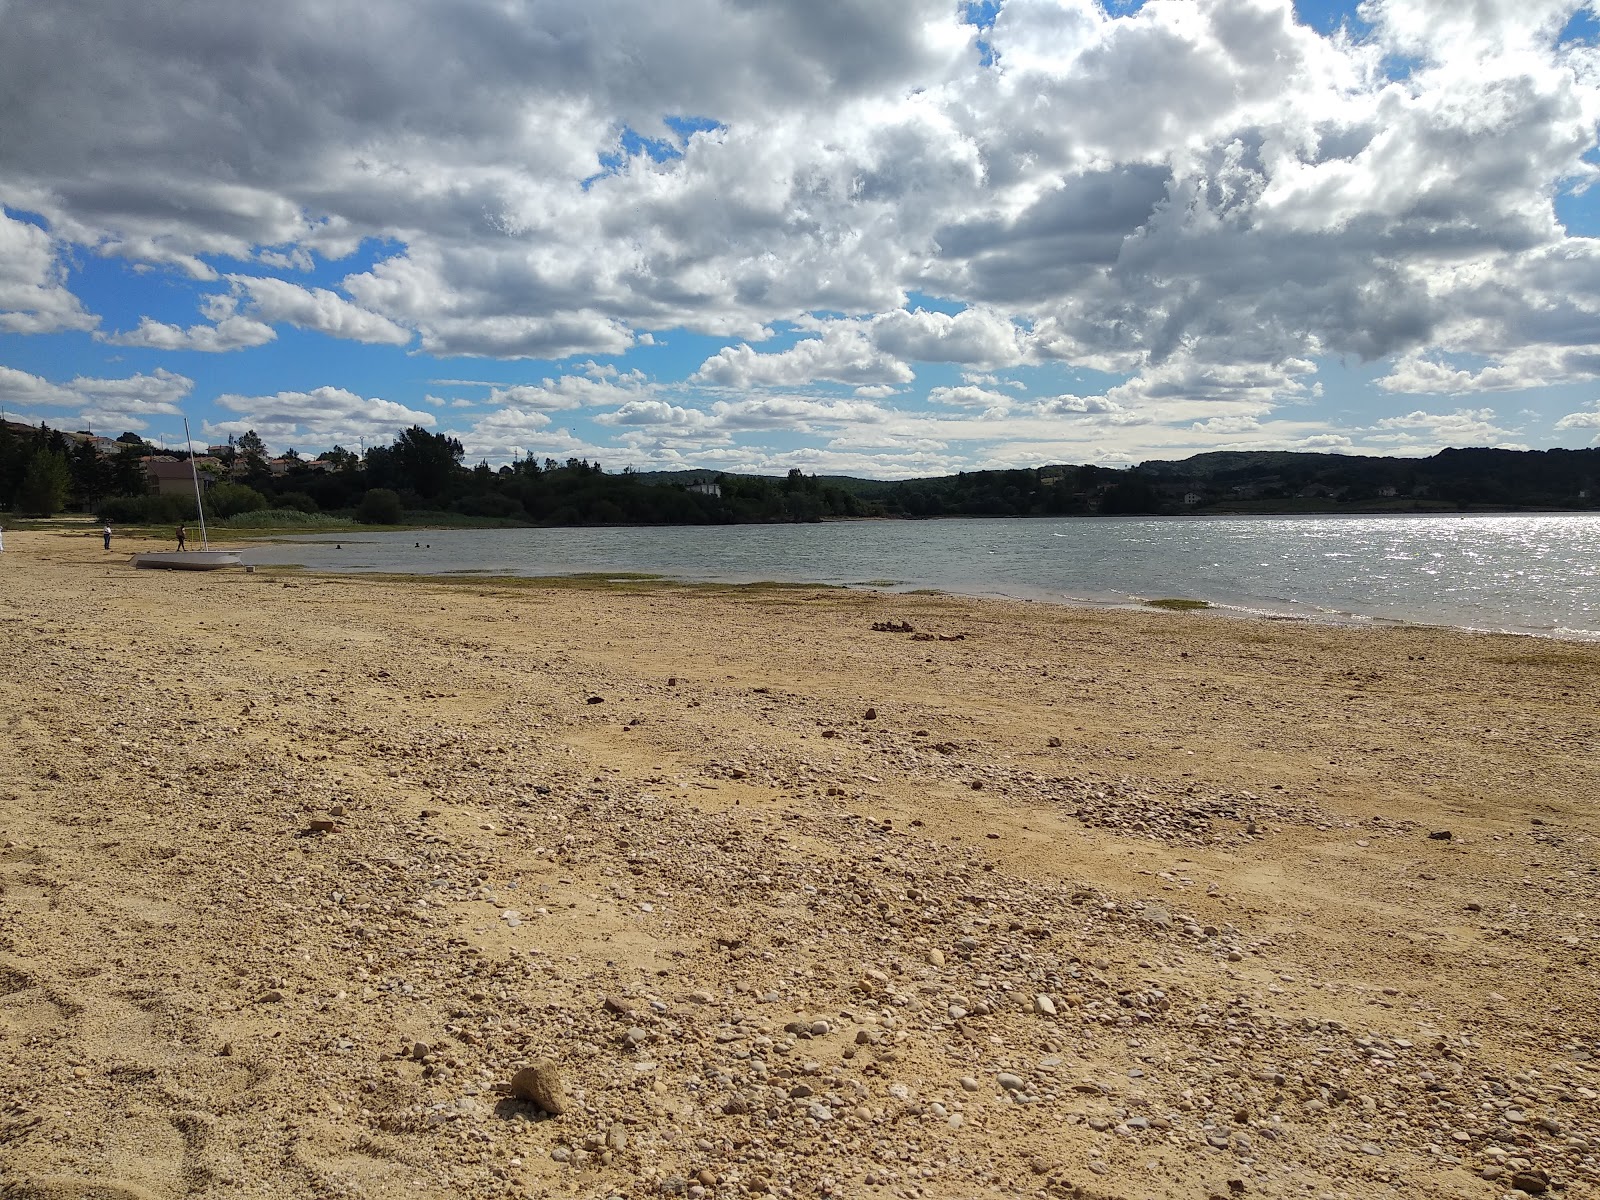 Foto de Playa Embalse del Ebro con agua cristalina superficie